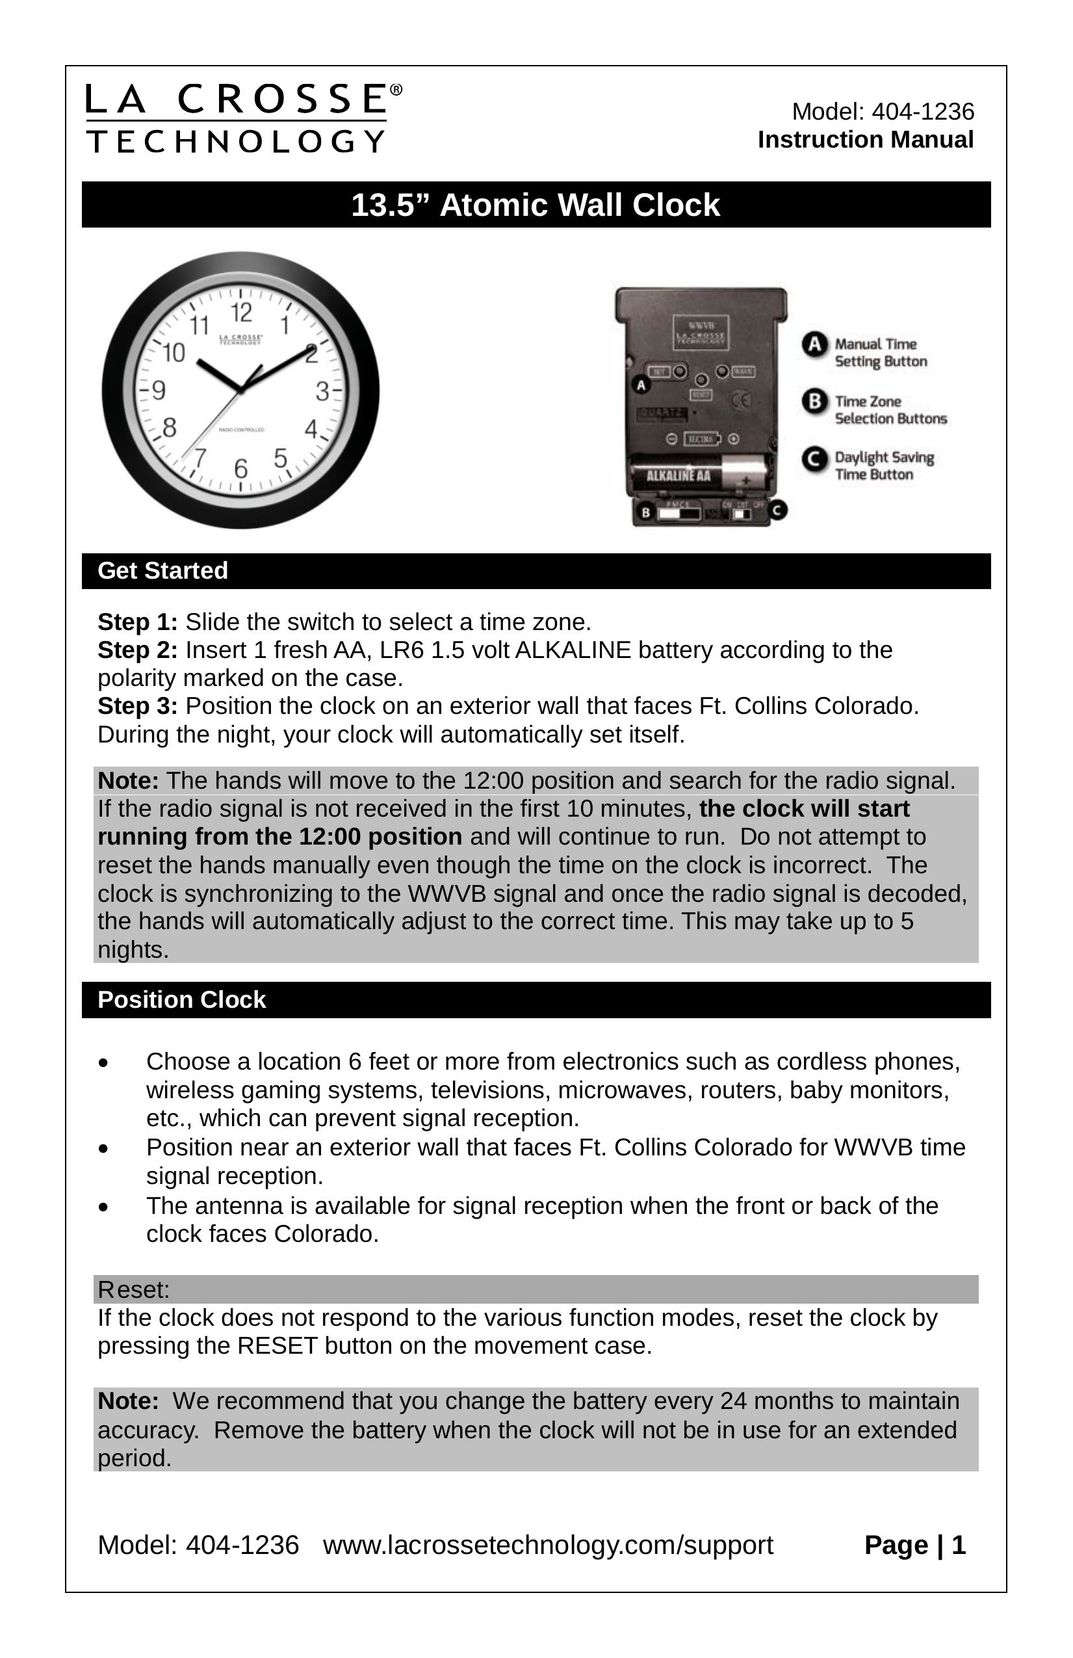 La Crosse Technology 404-1236 Clock User Manual